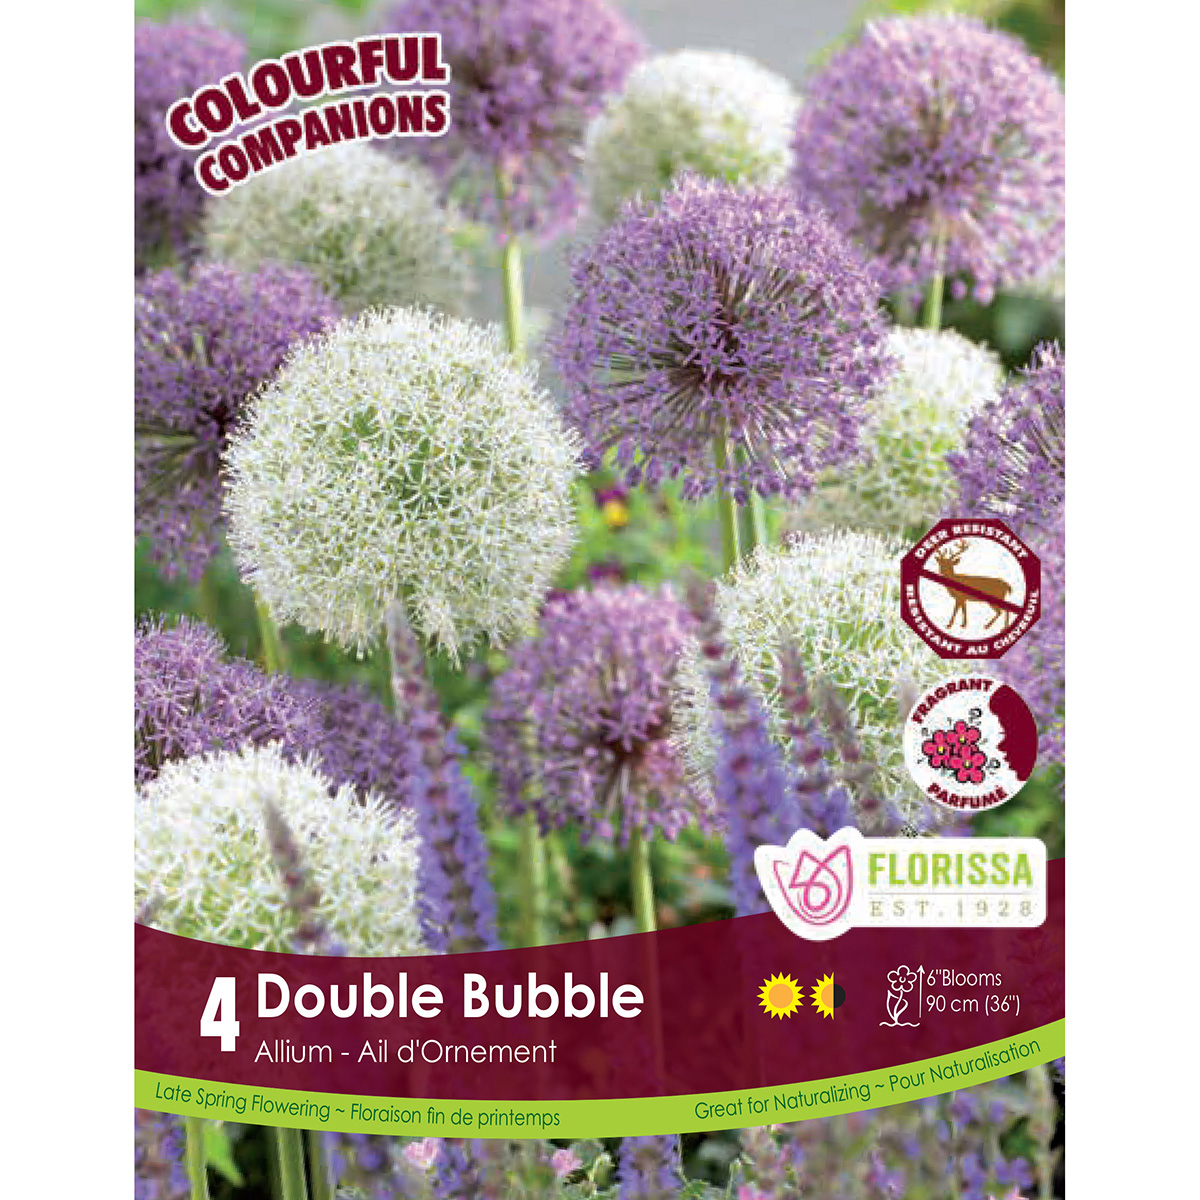 Colourful Companions 'Double Bubble' Allium Bulbs